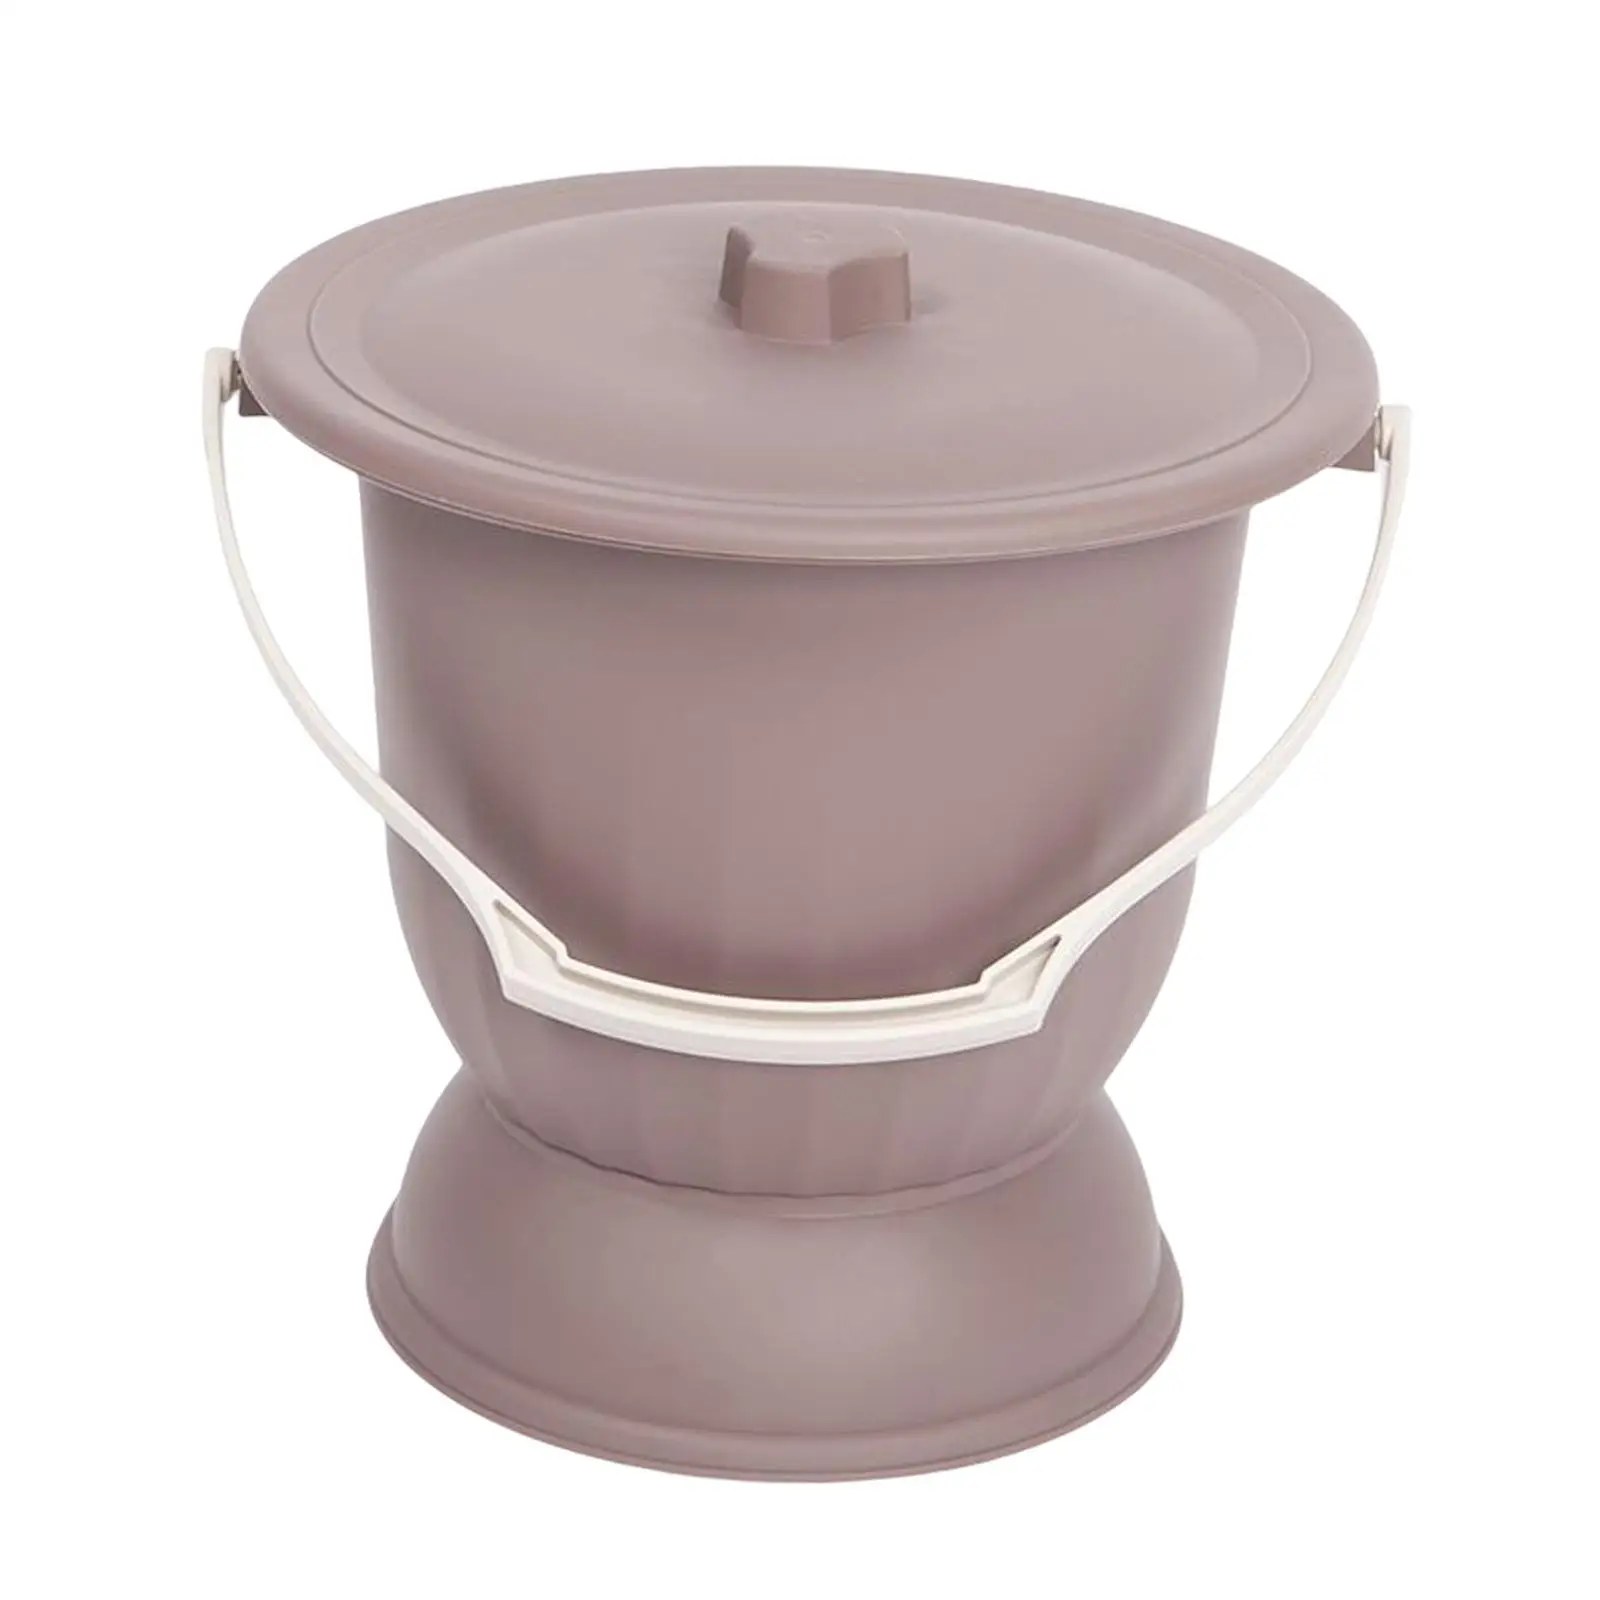 Chamber Pot with Lid Bedside Commode Bucket SplashPee Potty for Indoor